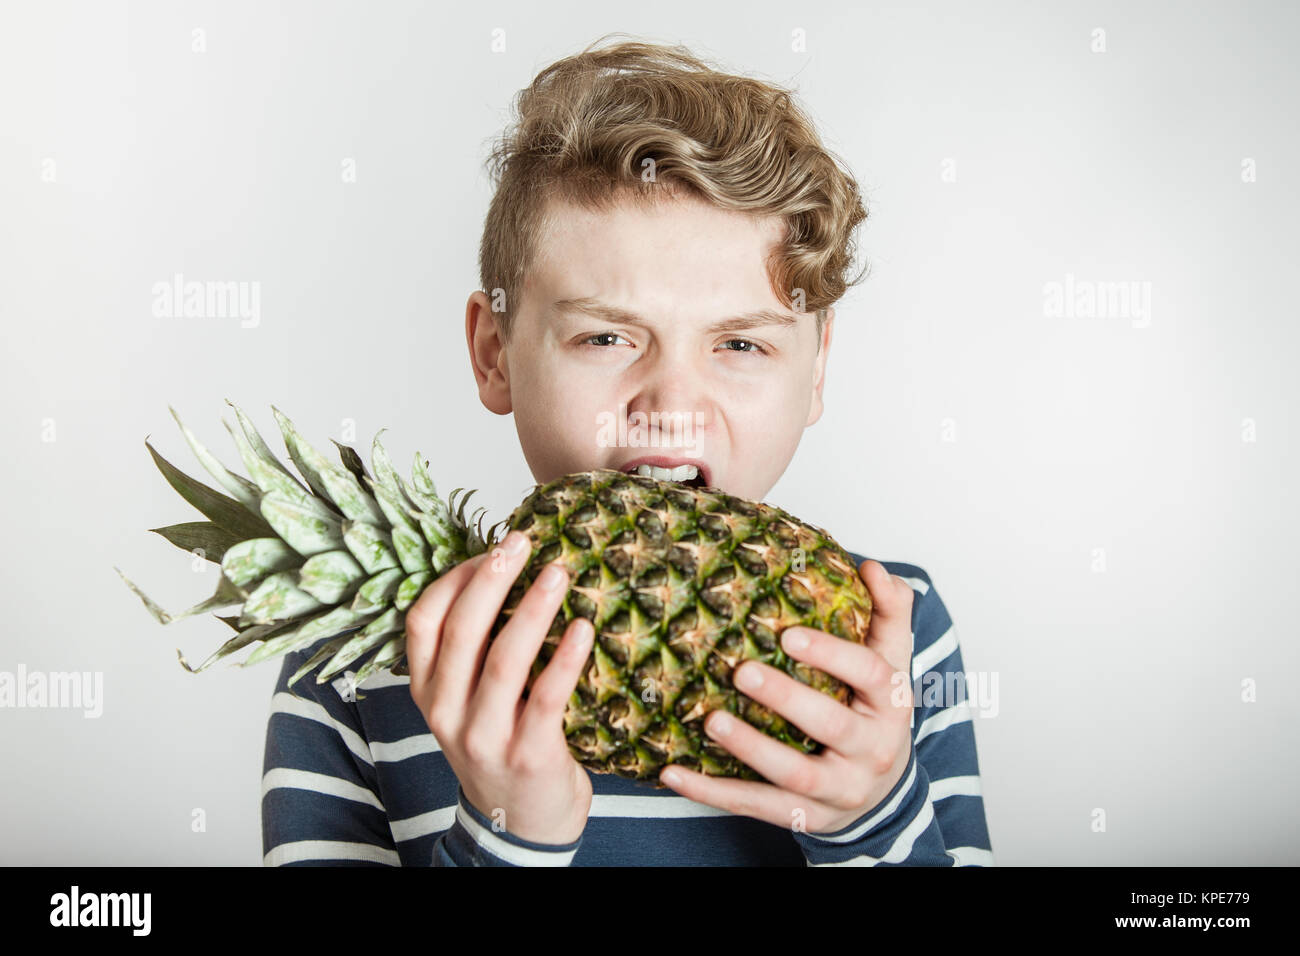 Boy Biting into Tough Skin of Pineapple Stock Photo